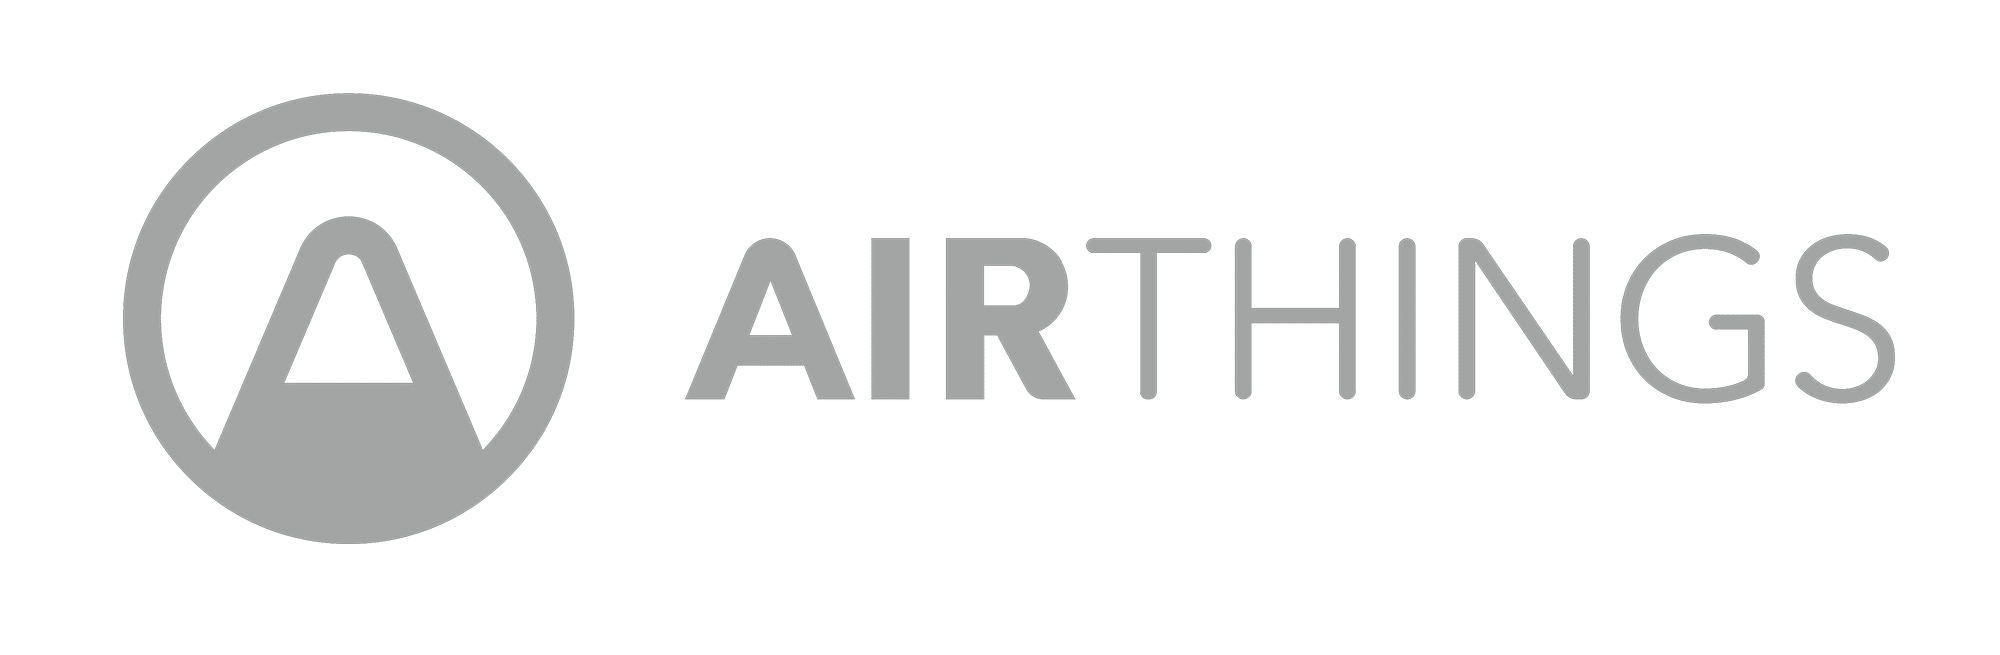 Airthings_Logo